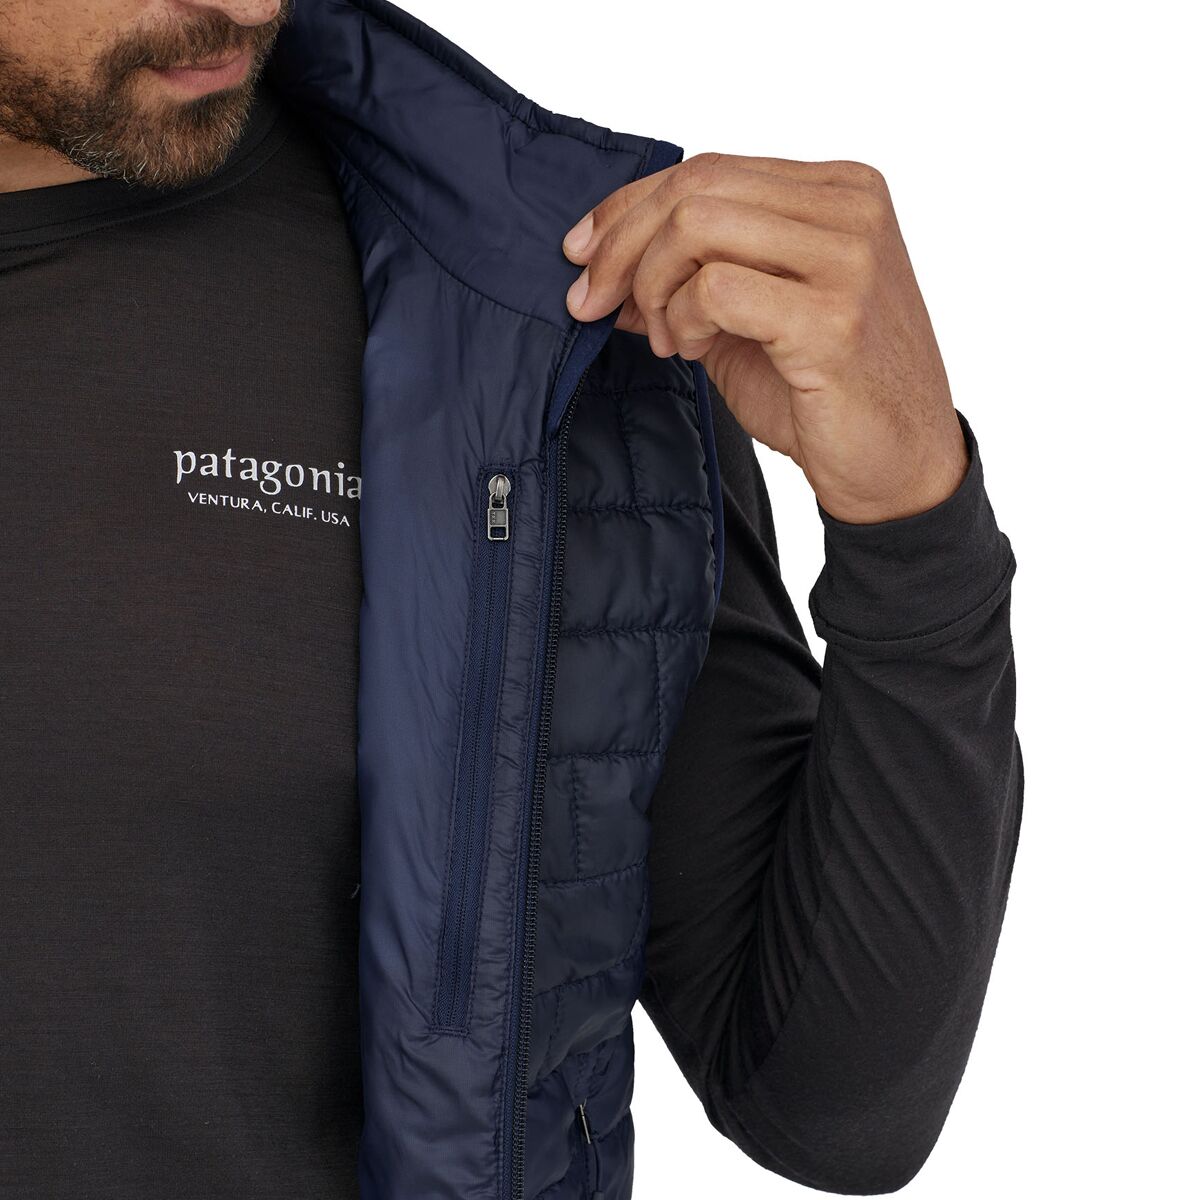 Patagonia Nano Puff Insulated Vest - Men's